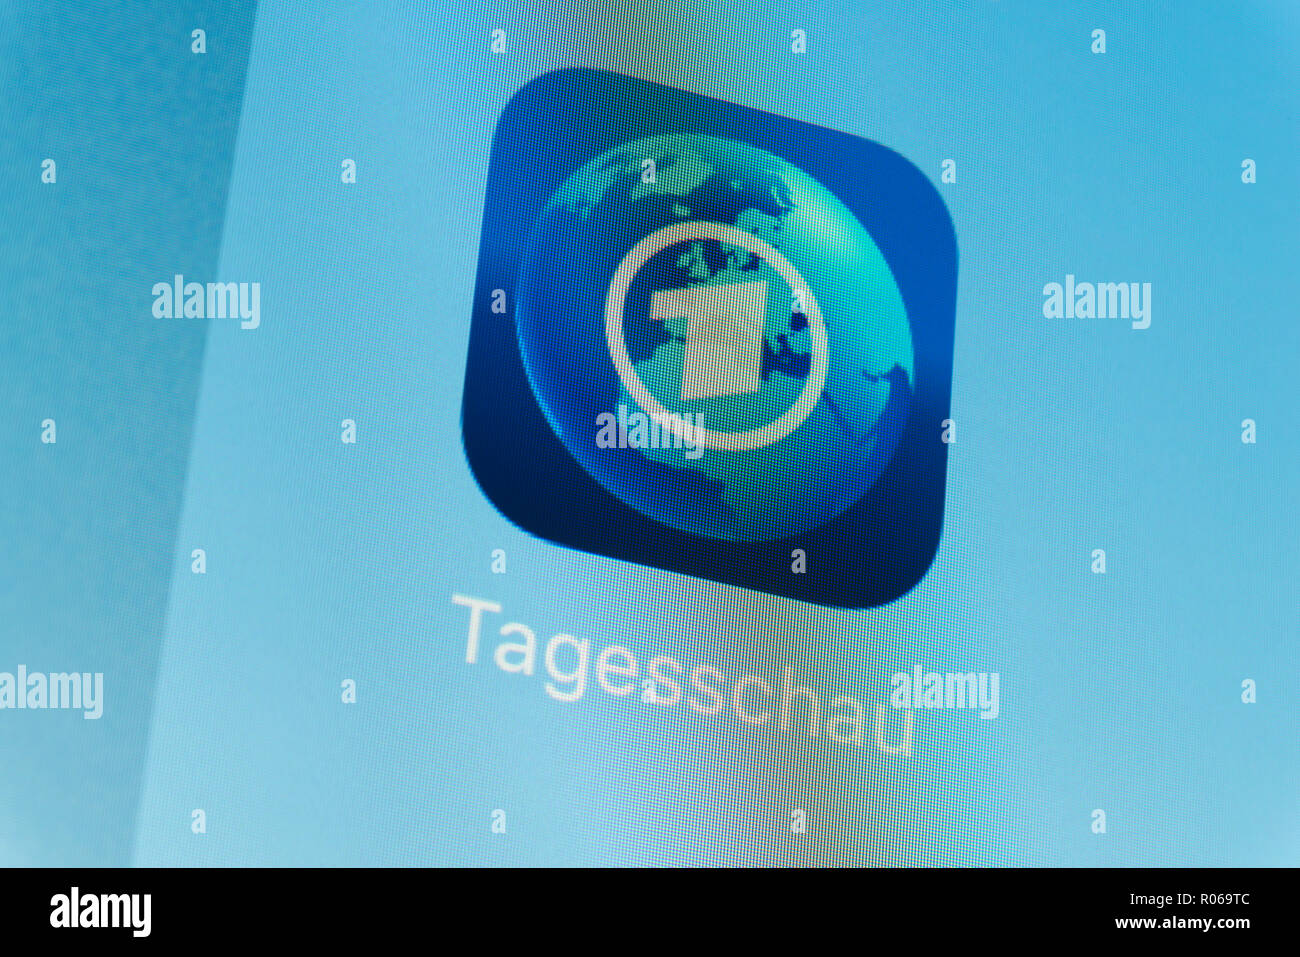 Tagesschau App on cellphone screen Stock Photo